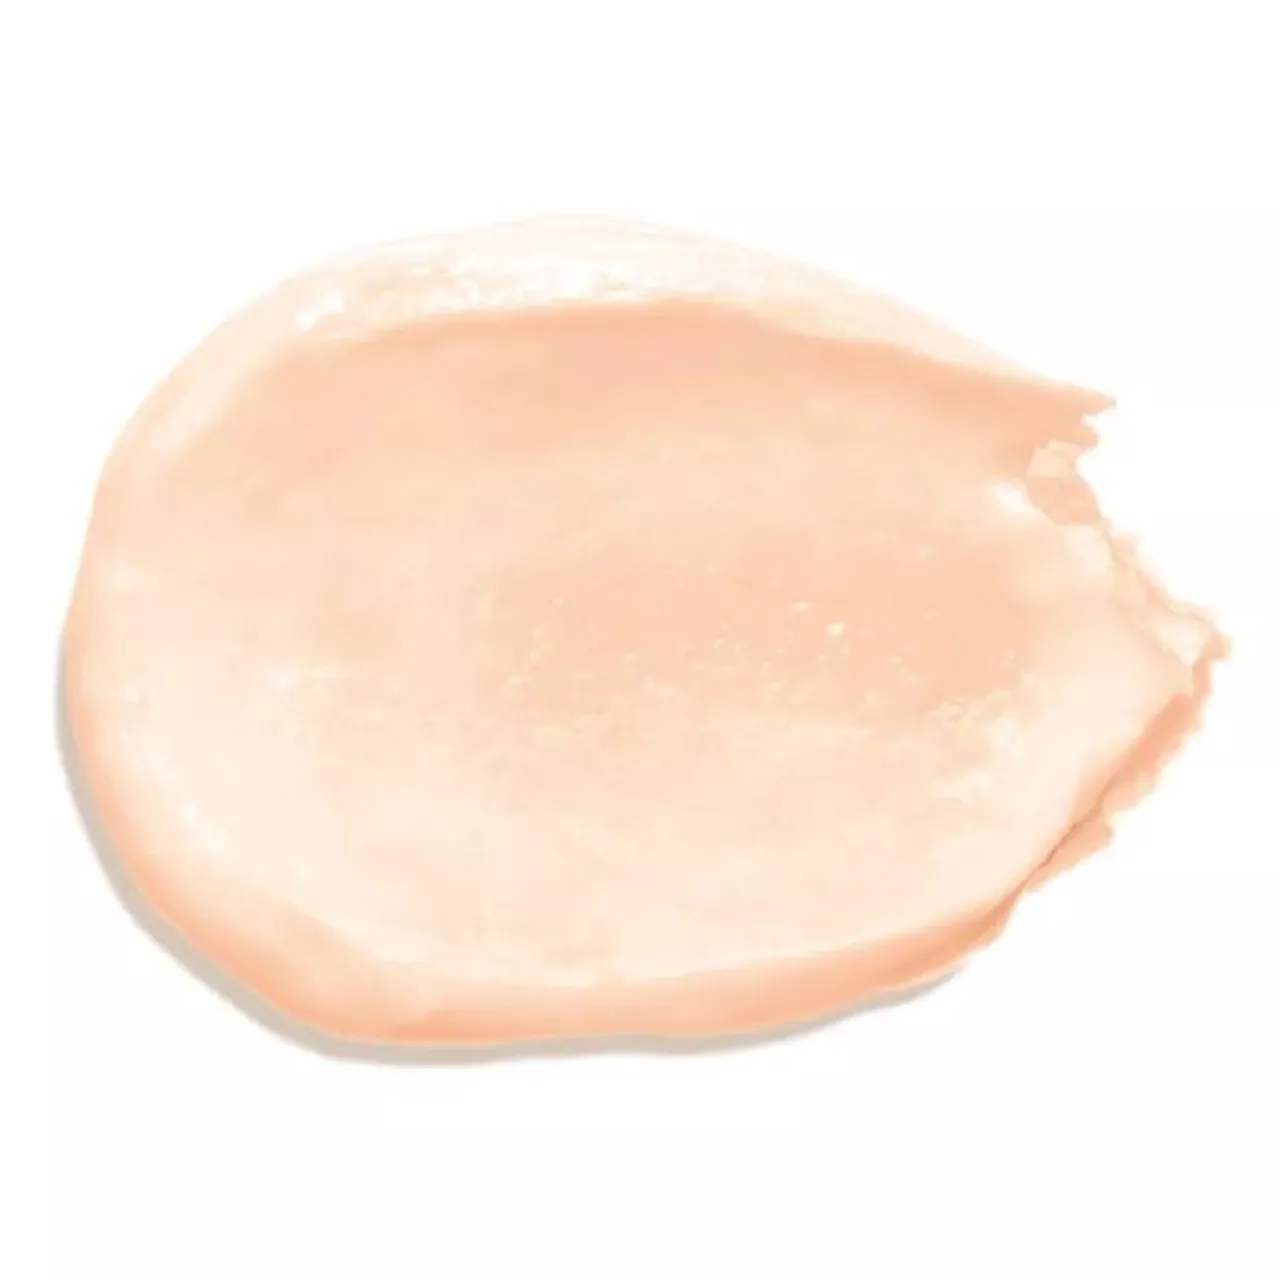 Clarins Extra-Firming Day Cream - Dry Skin, 50ml - Unisex - Size: 50ml